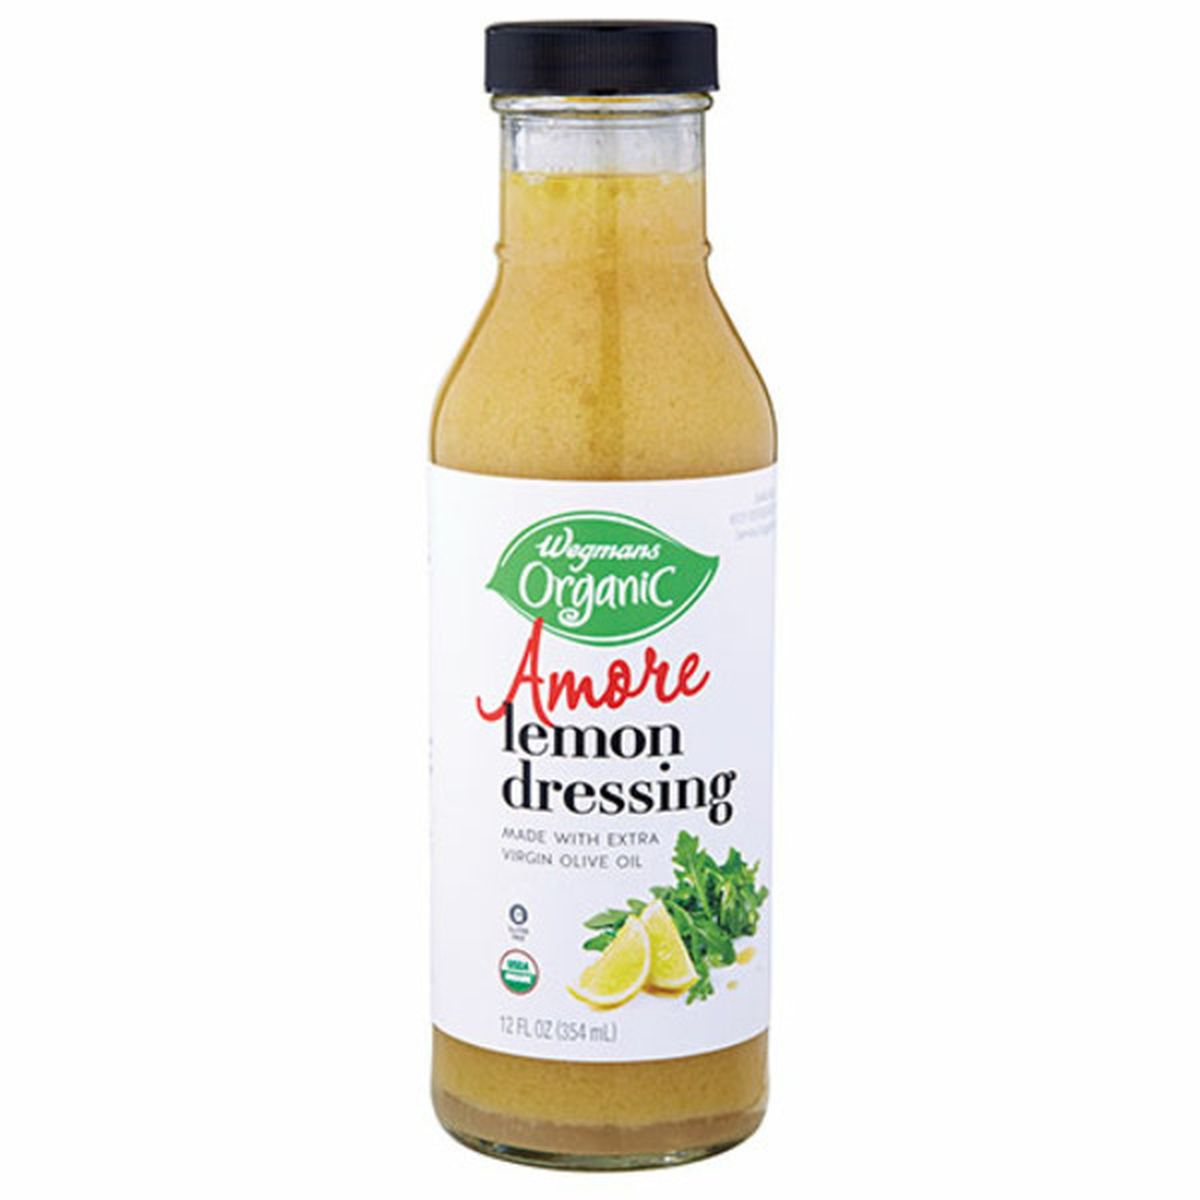 Calories in Wegmans Organic Amore Lemon Dressing